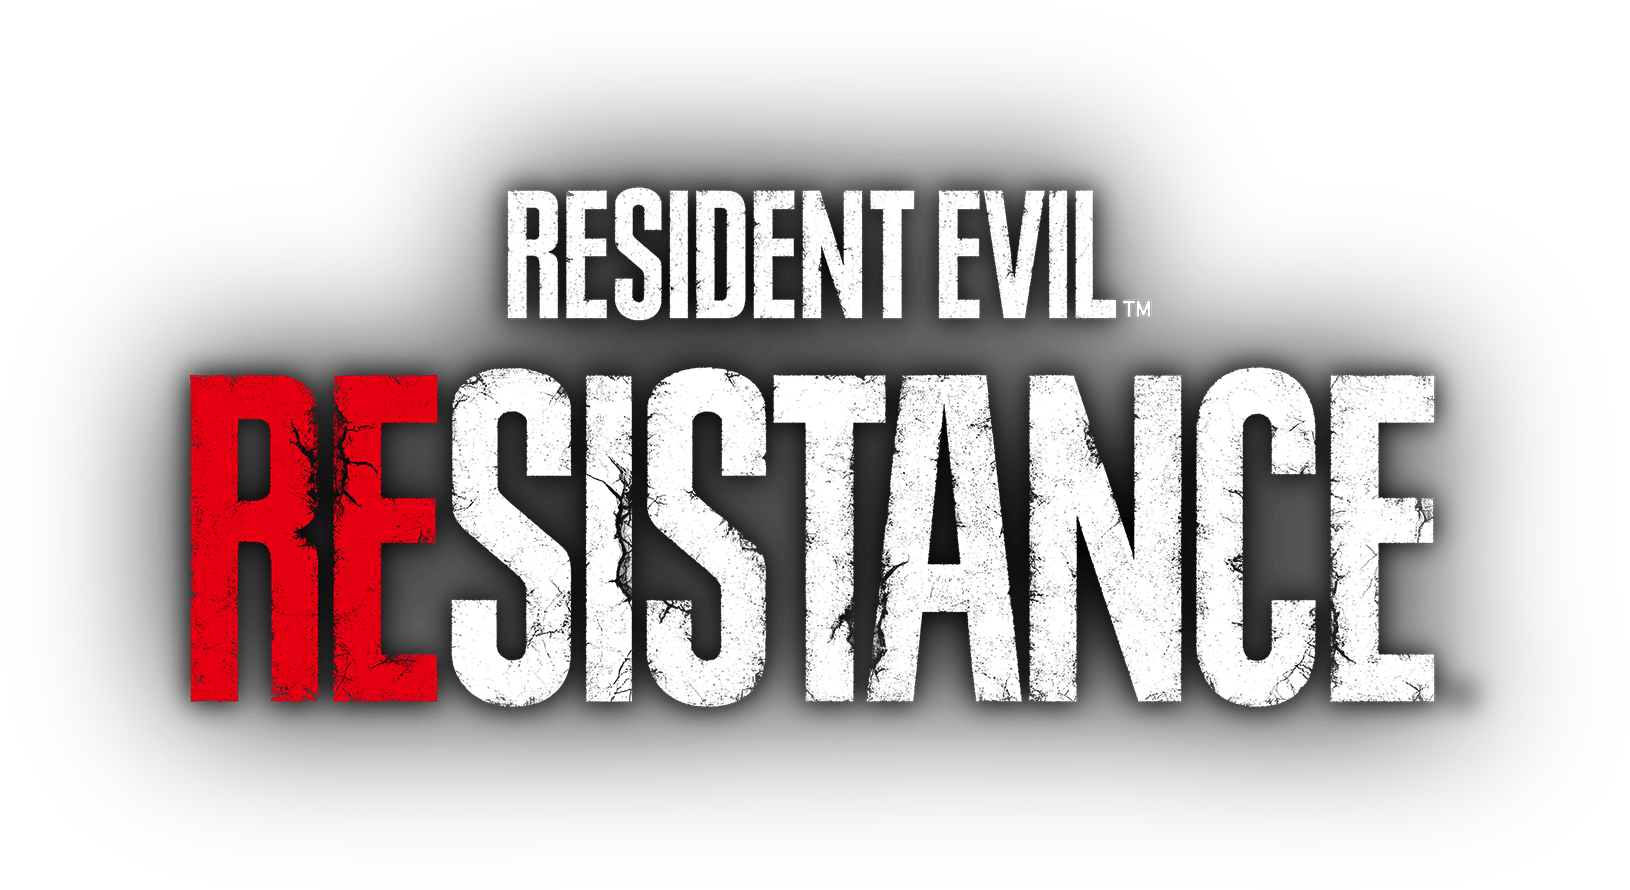 Resident Evil Logo Transparent Background